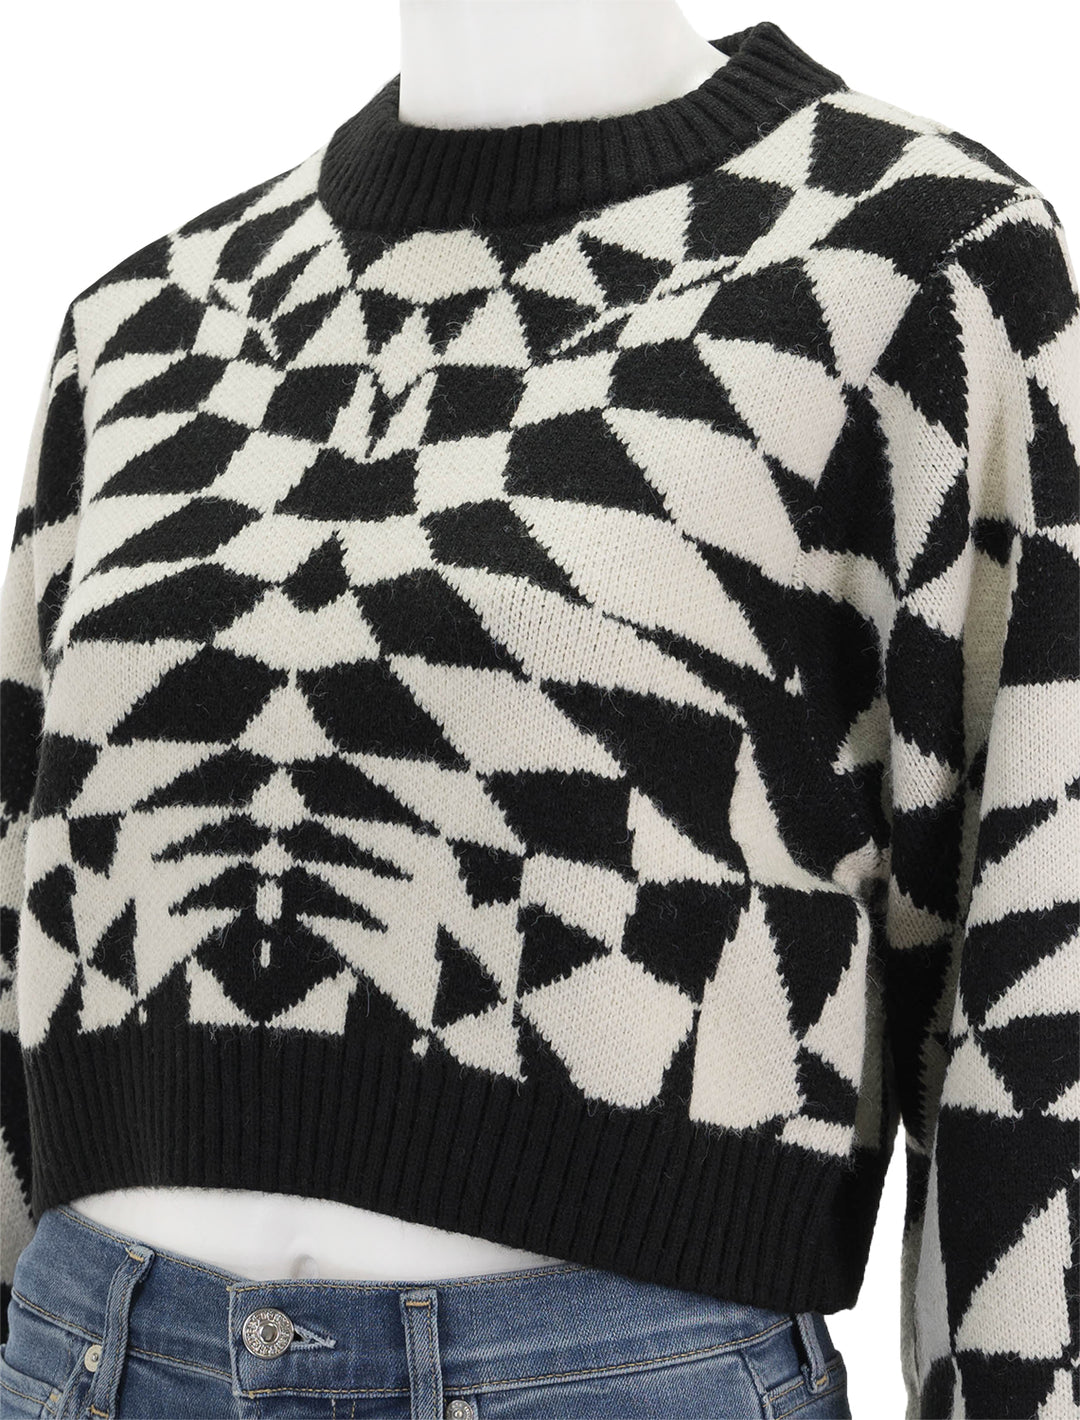 Close-up view of FARM Rio's heart deco black knit sweater.